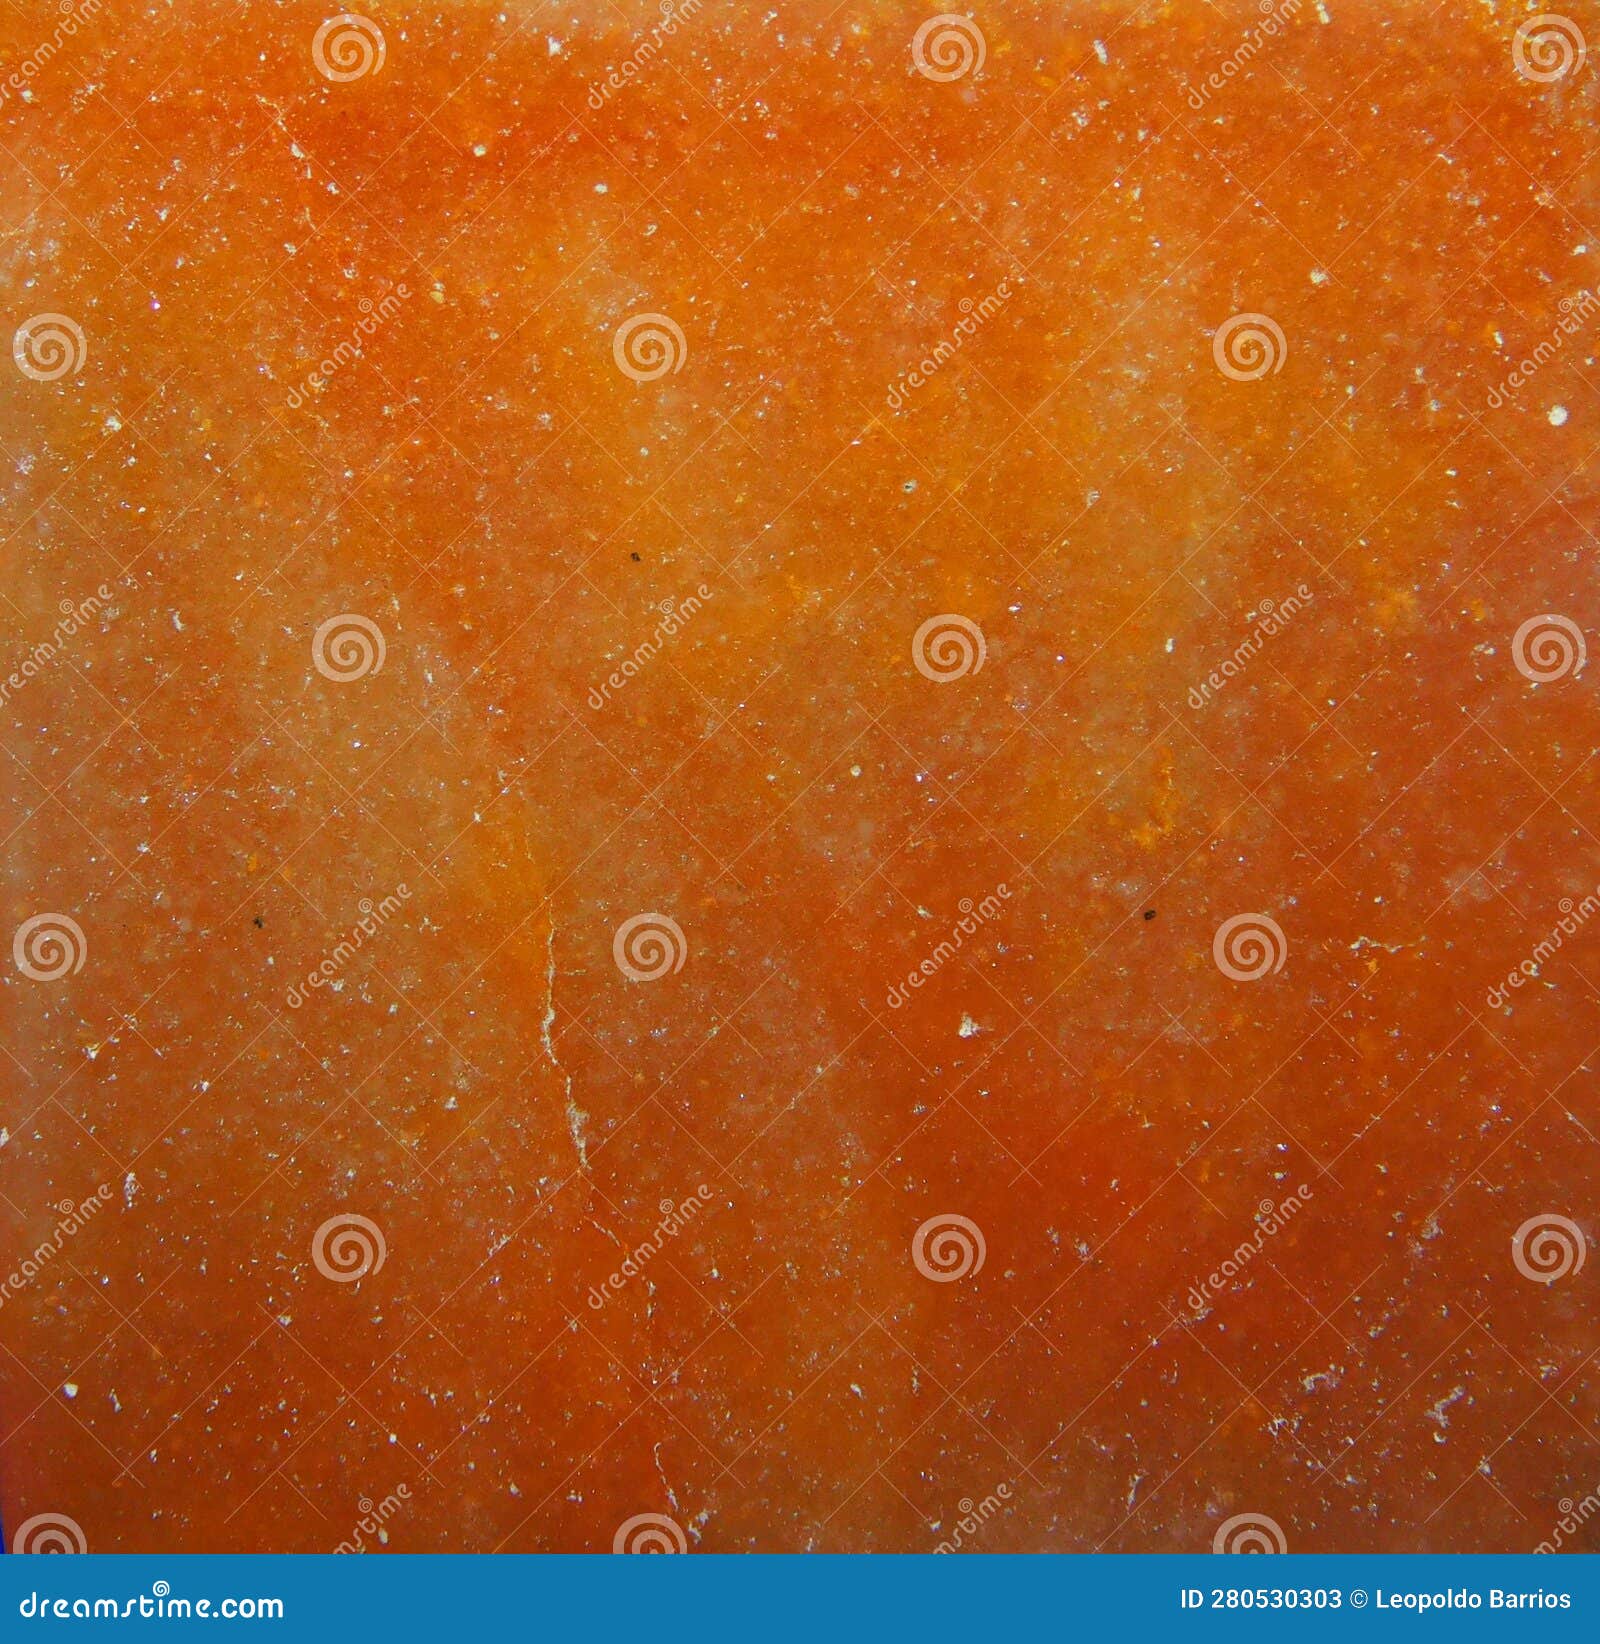 orange calcita polish for backgrounds